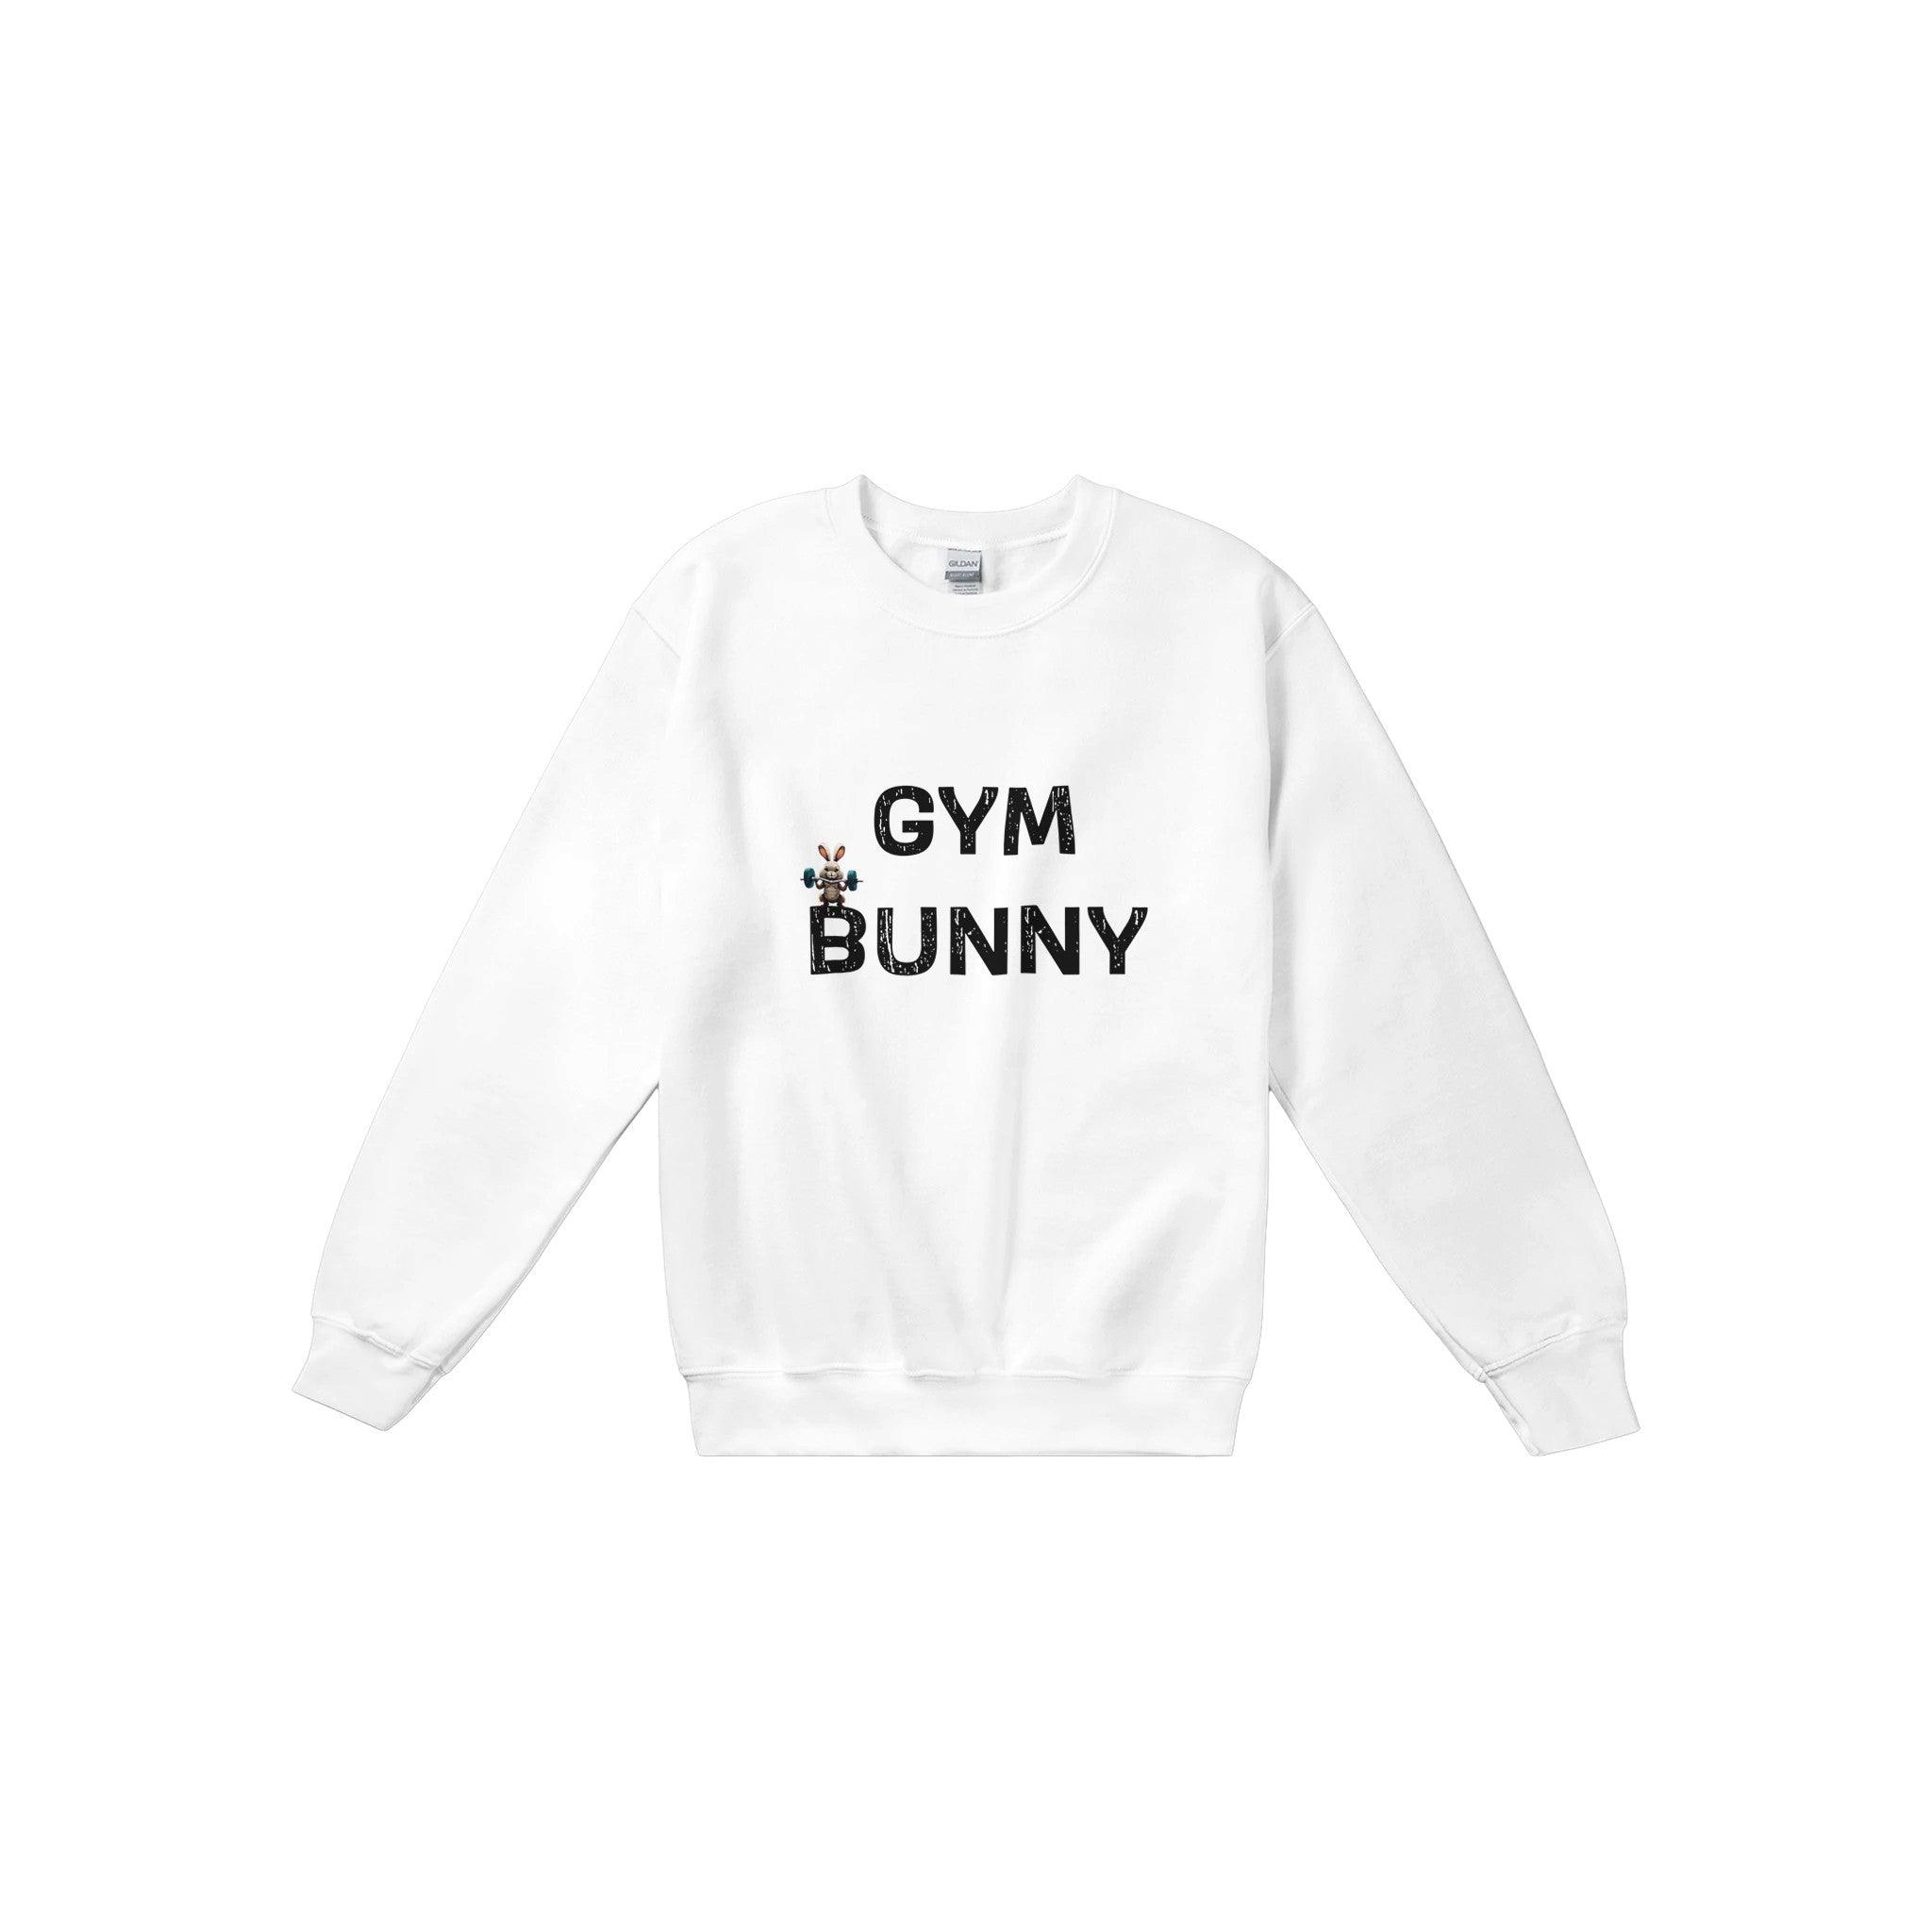 'Gym Bunny' Boyfriend Sweatshirt - POMA